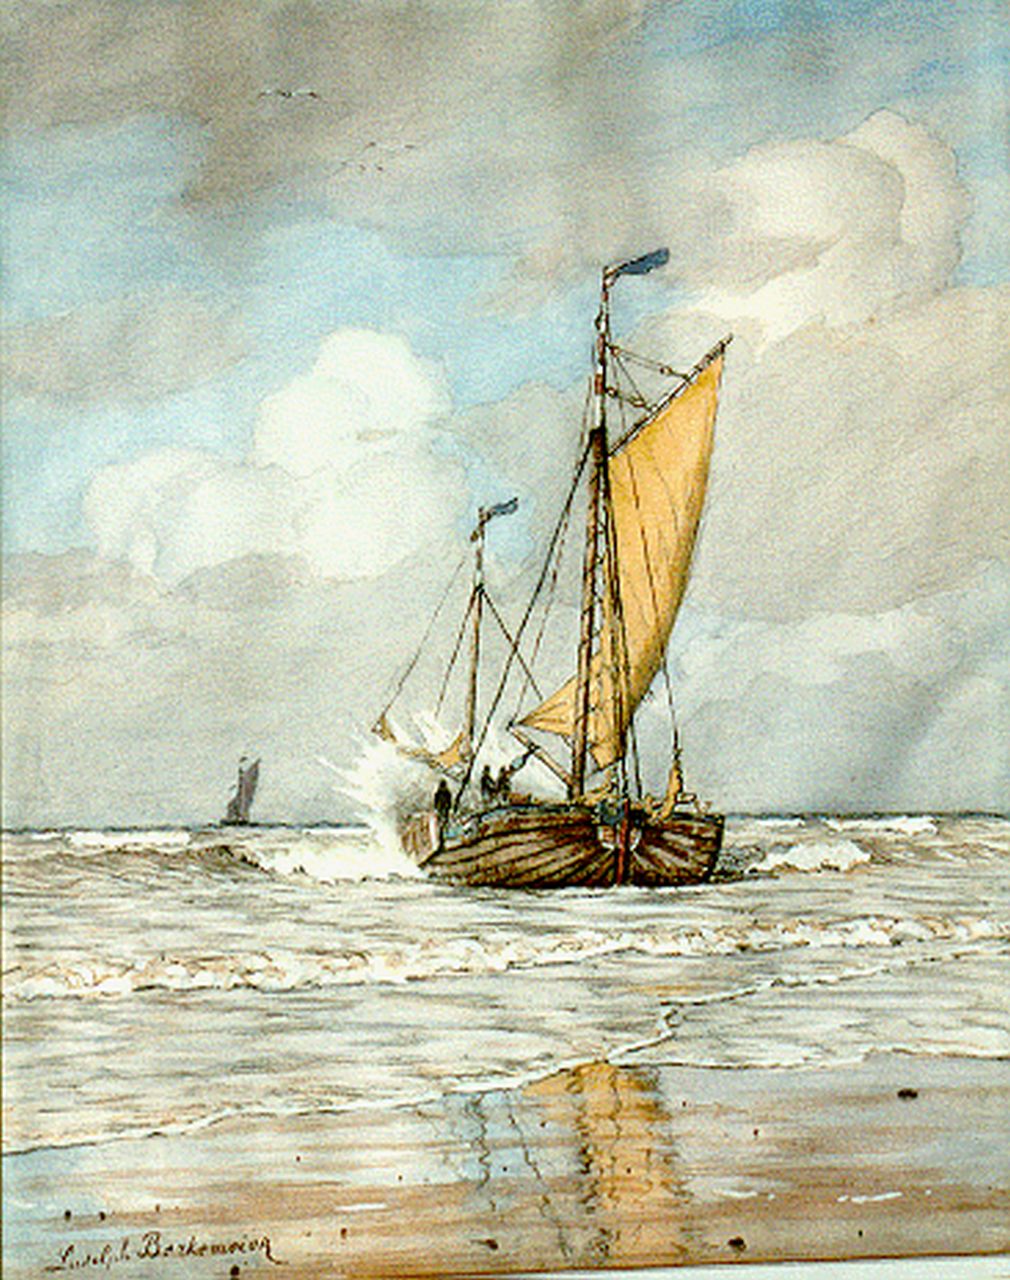 Berkemeier L.G.J.  | 'Ludolph' Georg Julius Berkemeier, A 'bomschuit' offshore, Aquarell auf Papier 55,0 x 43,0 cm, signed l.l.